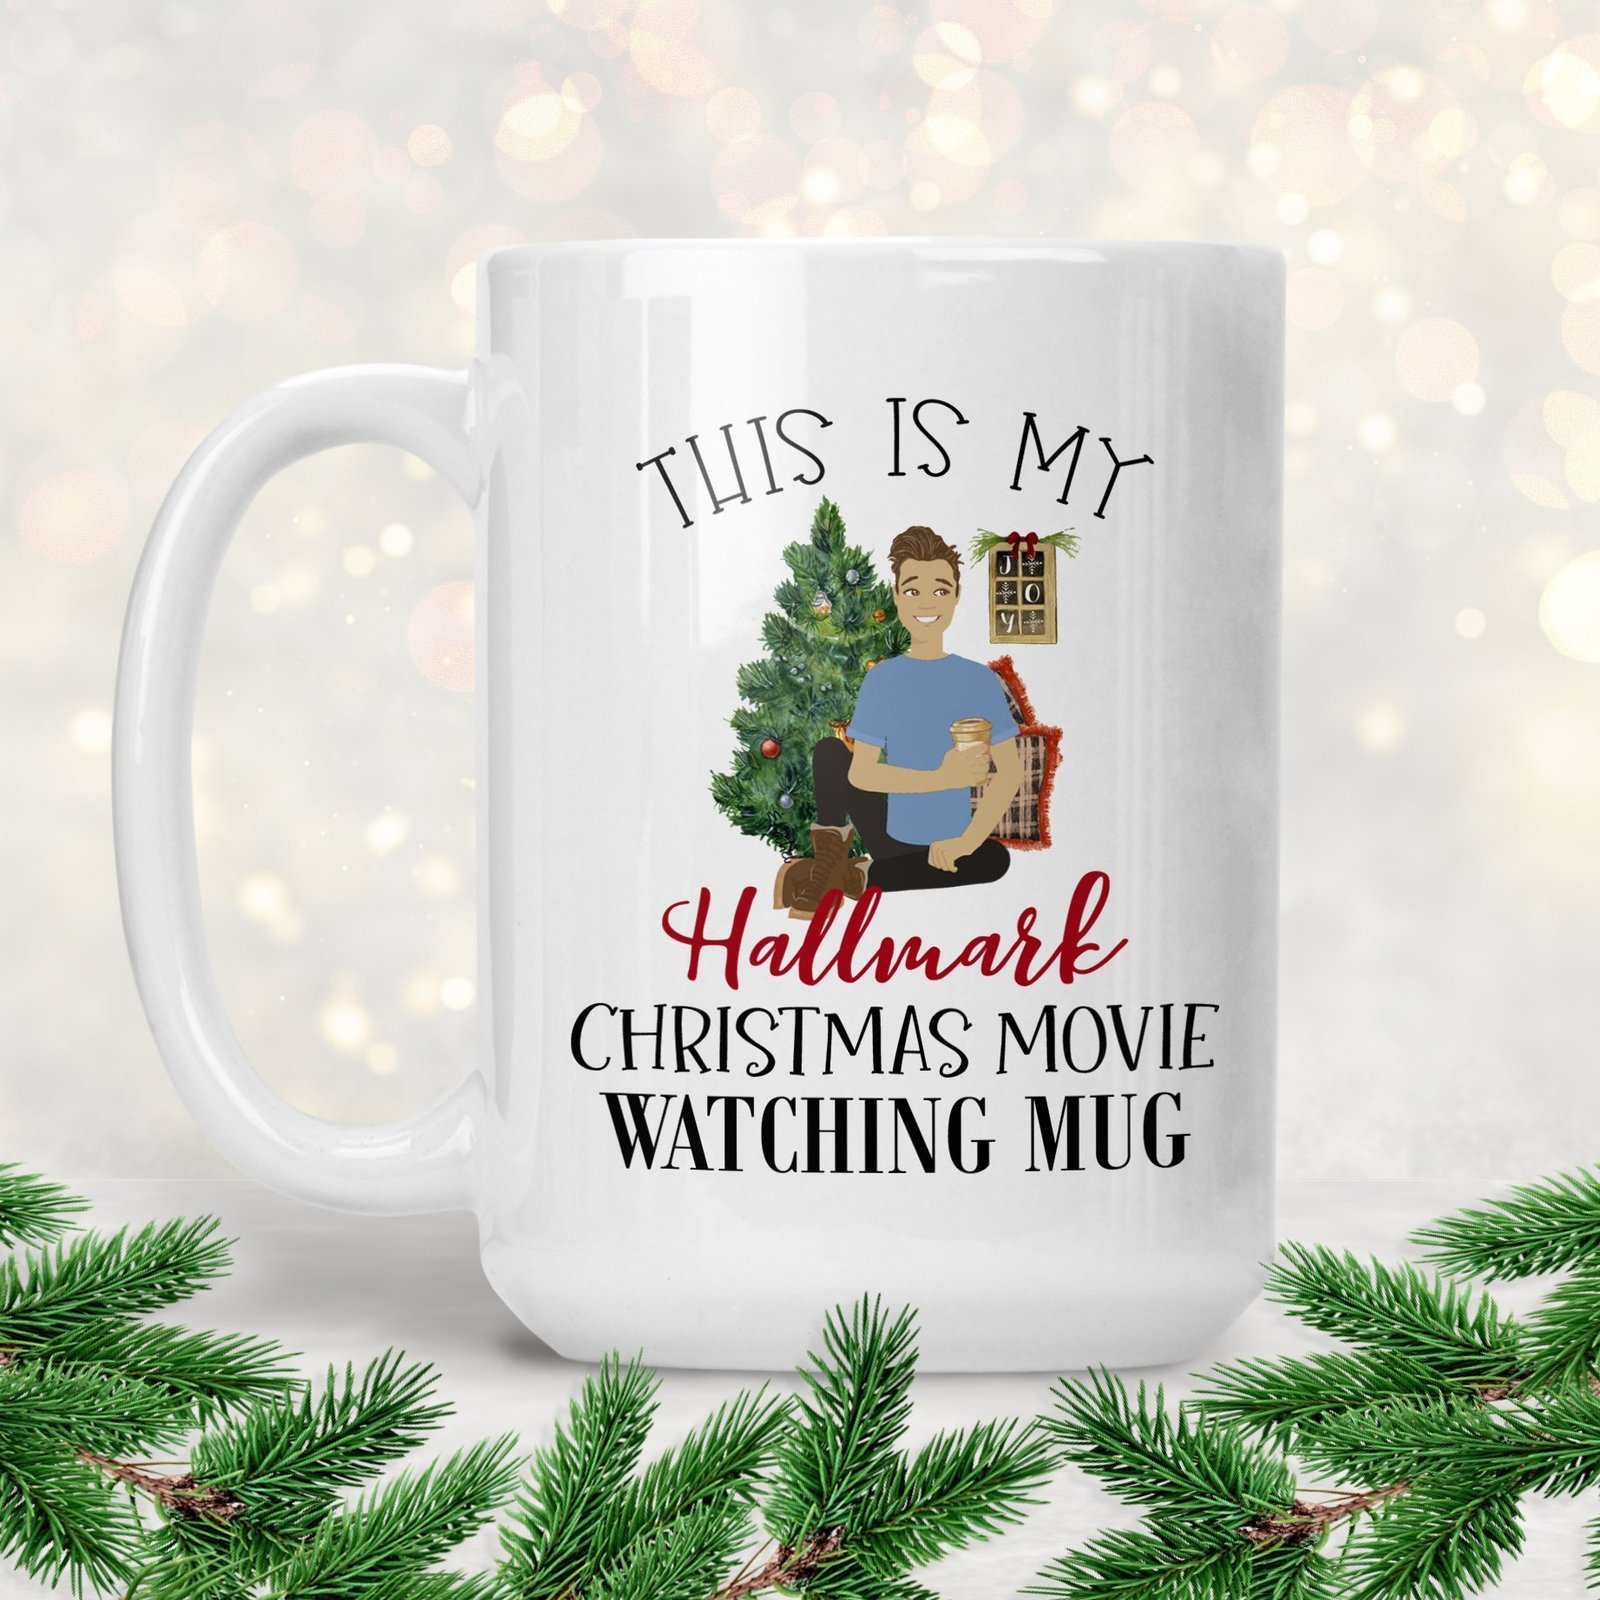 New Mug - This is my HALLMARK CHRISTMAS MOVIE Watching Mug for him